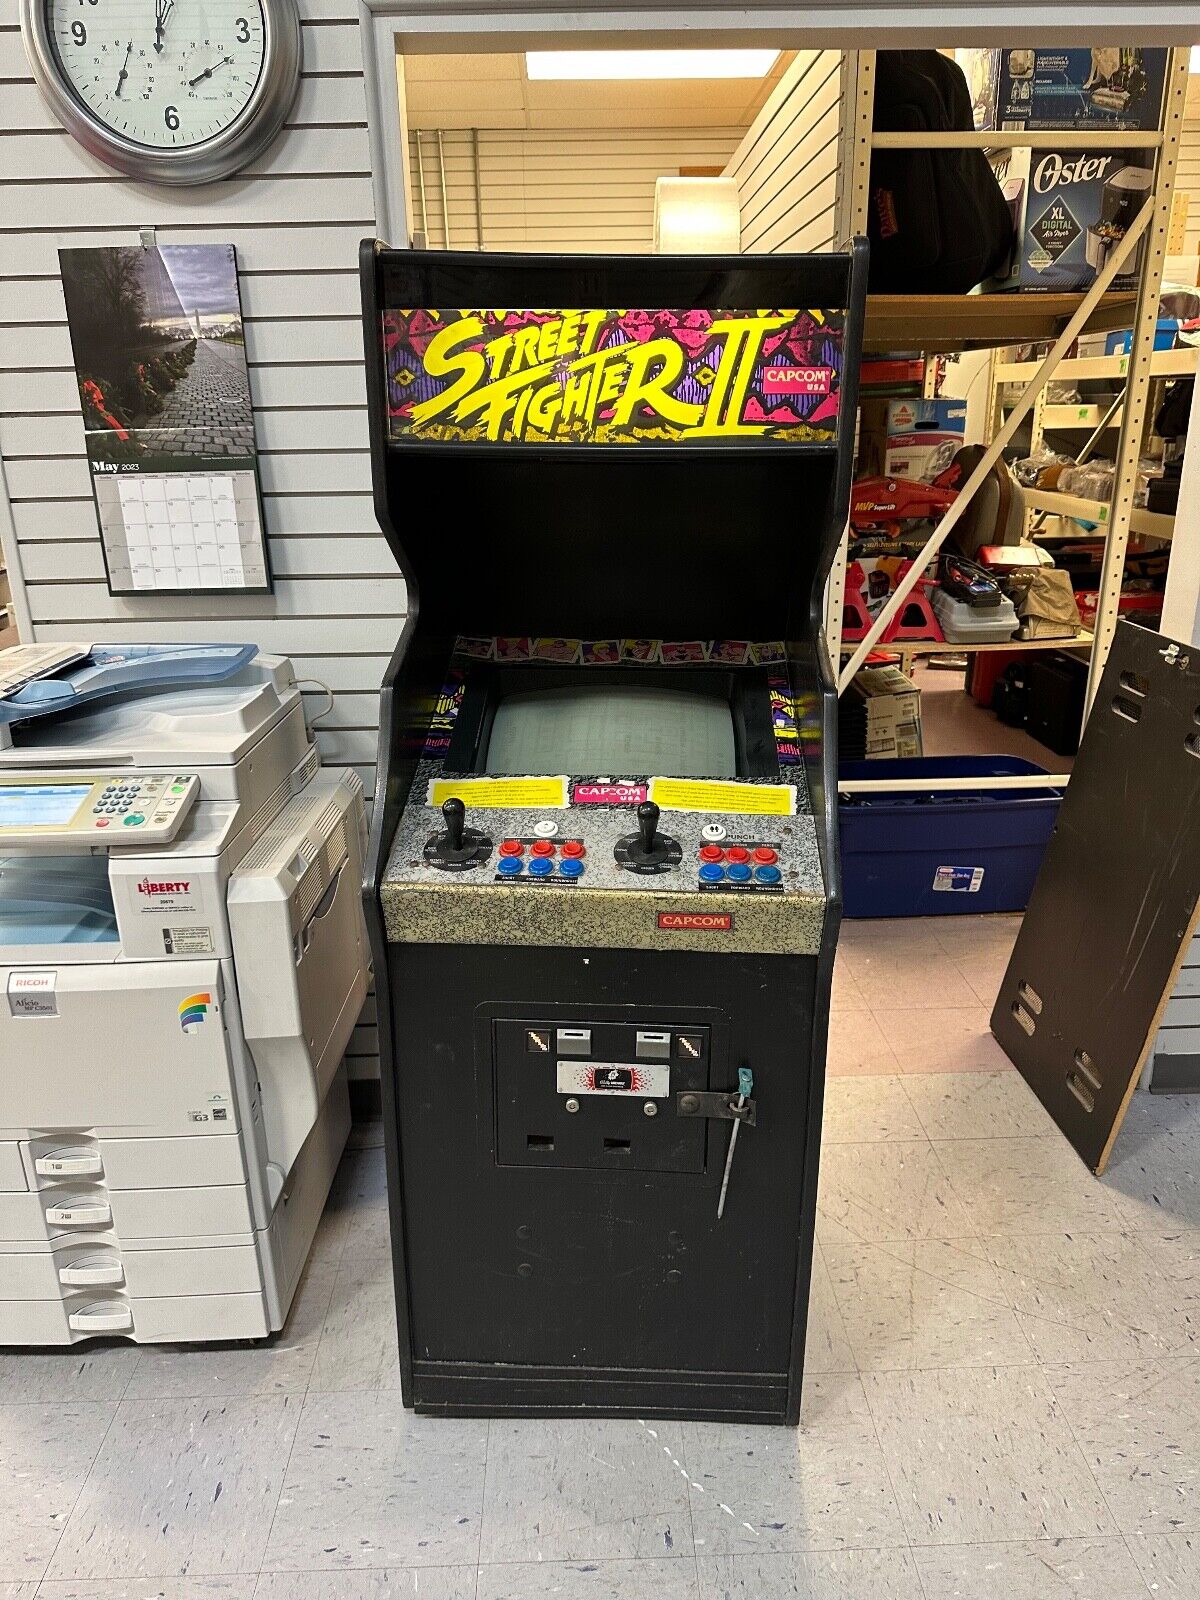 Street Fighter Arcade Sf2 Cabinet, Orginally Super Pacman Cab, CRT Not working